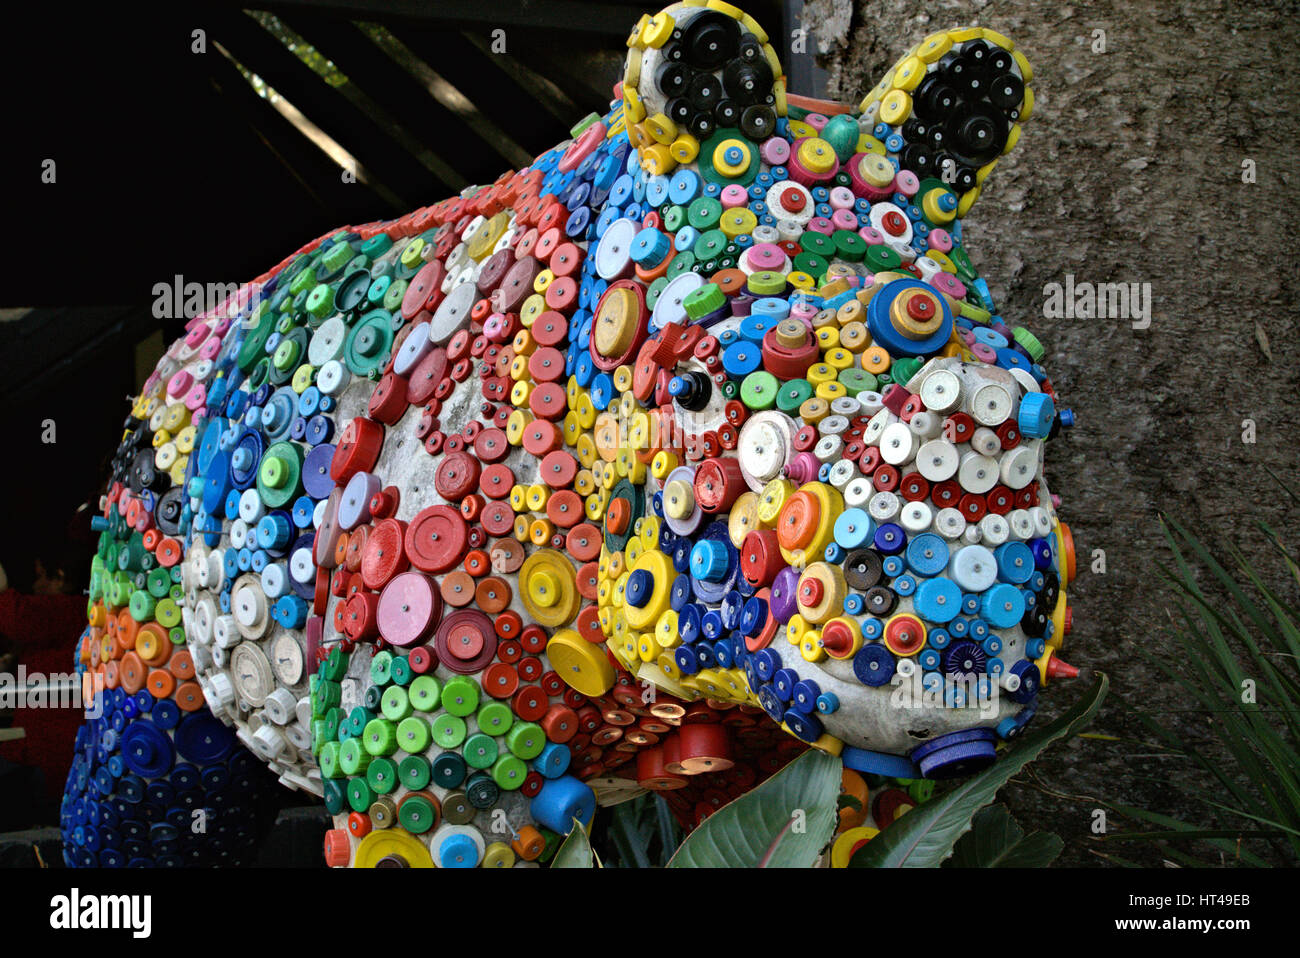 Rhino sculpture with plastic lids. Animal sculpture in Australia. Stock Photo